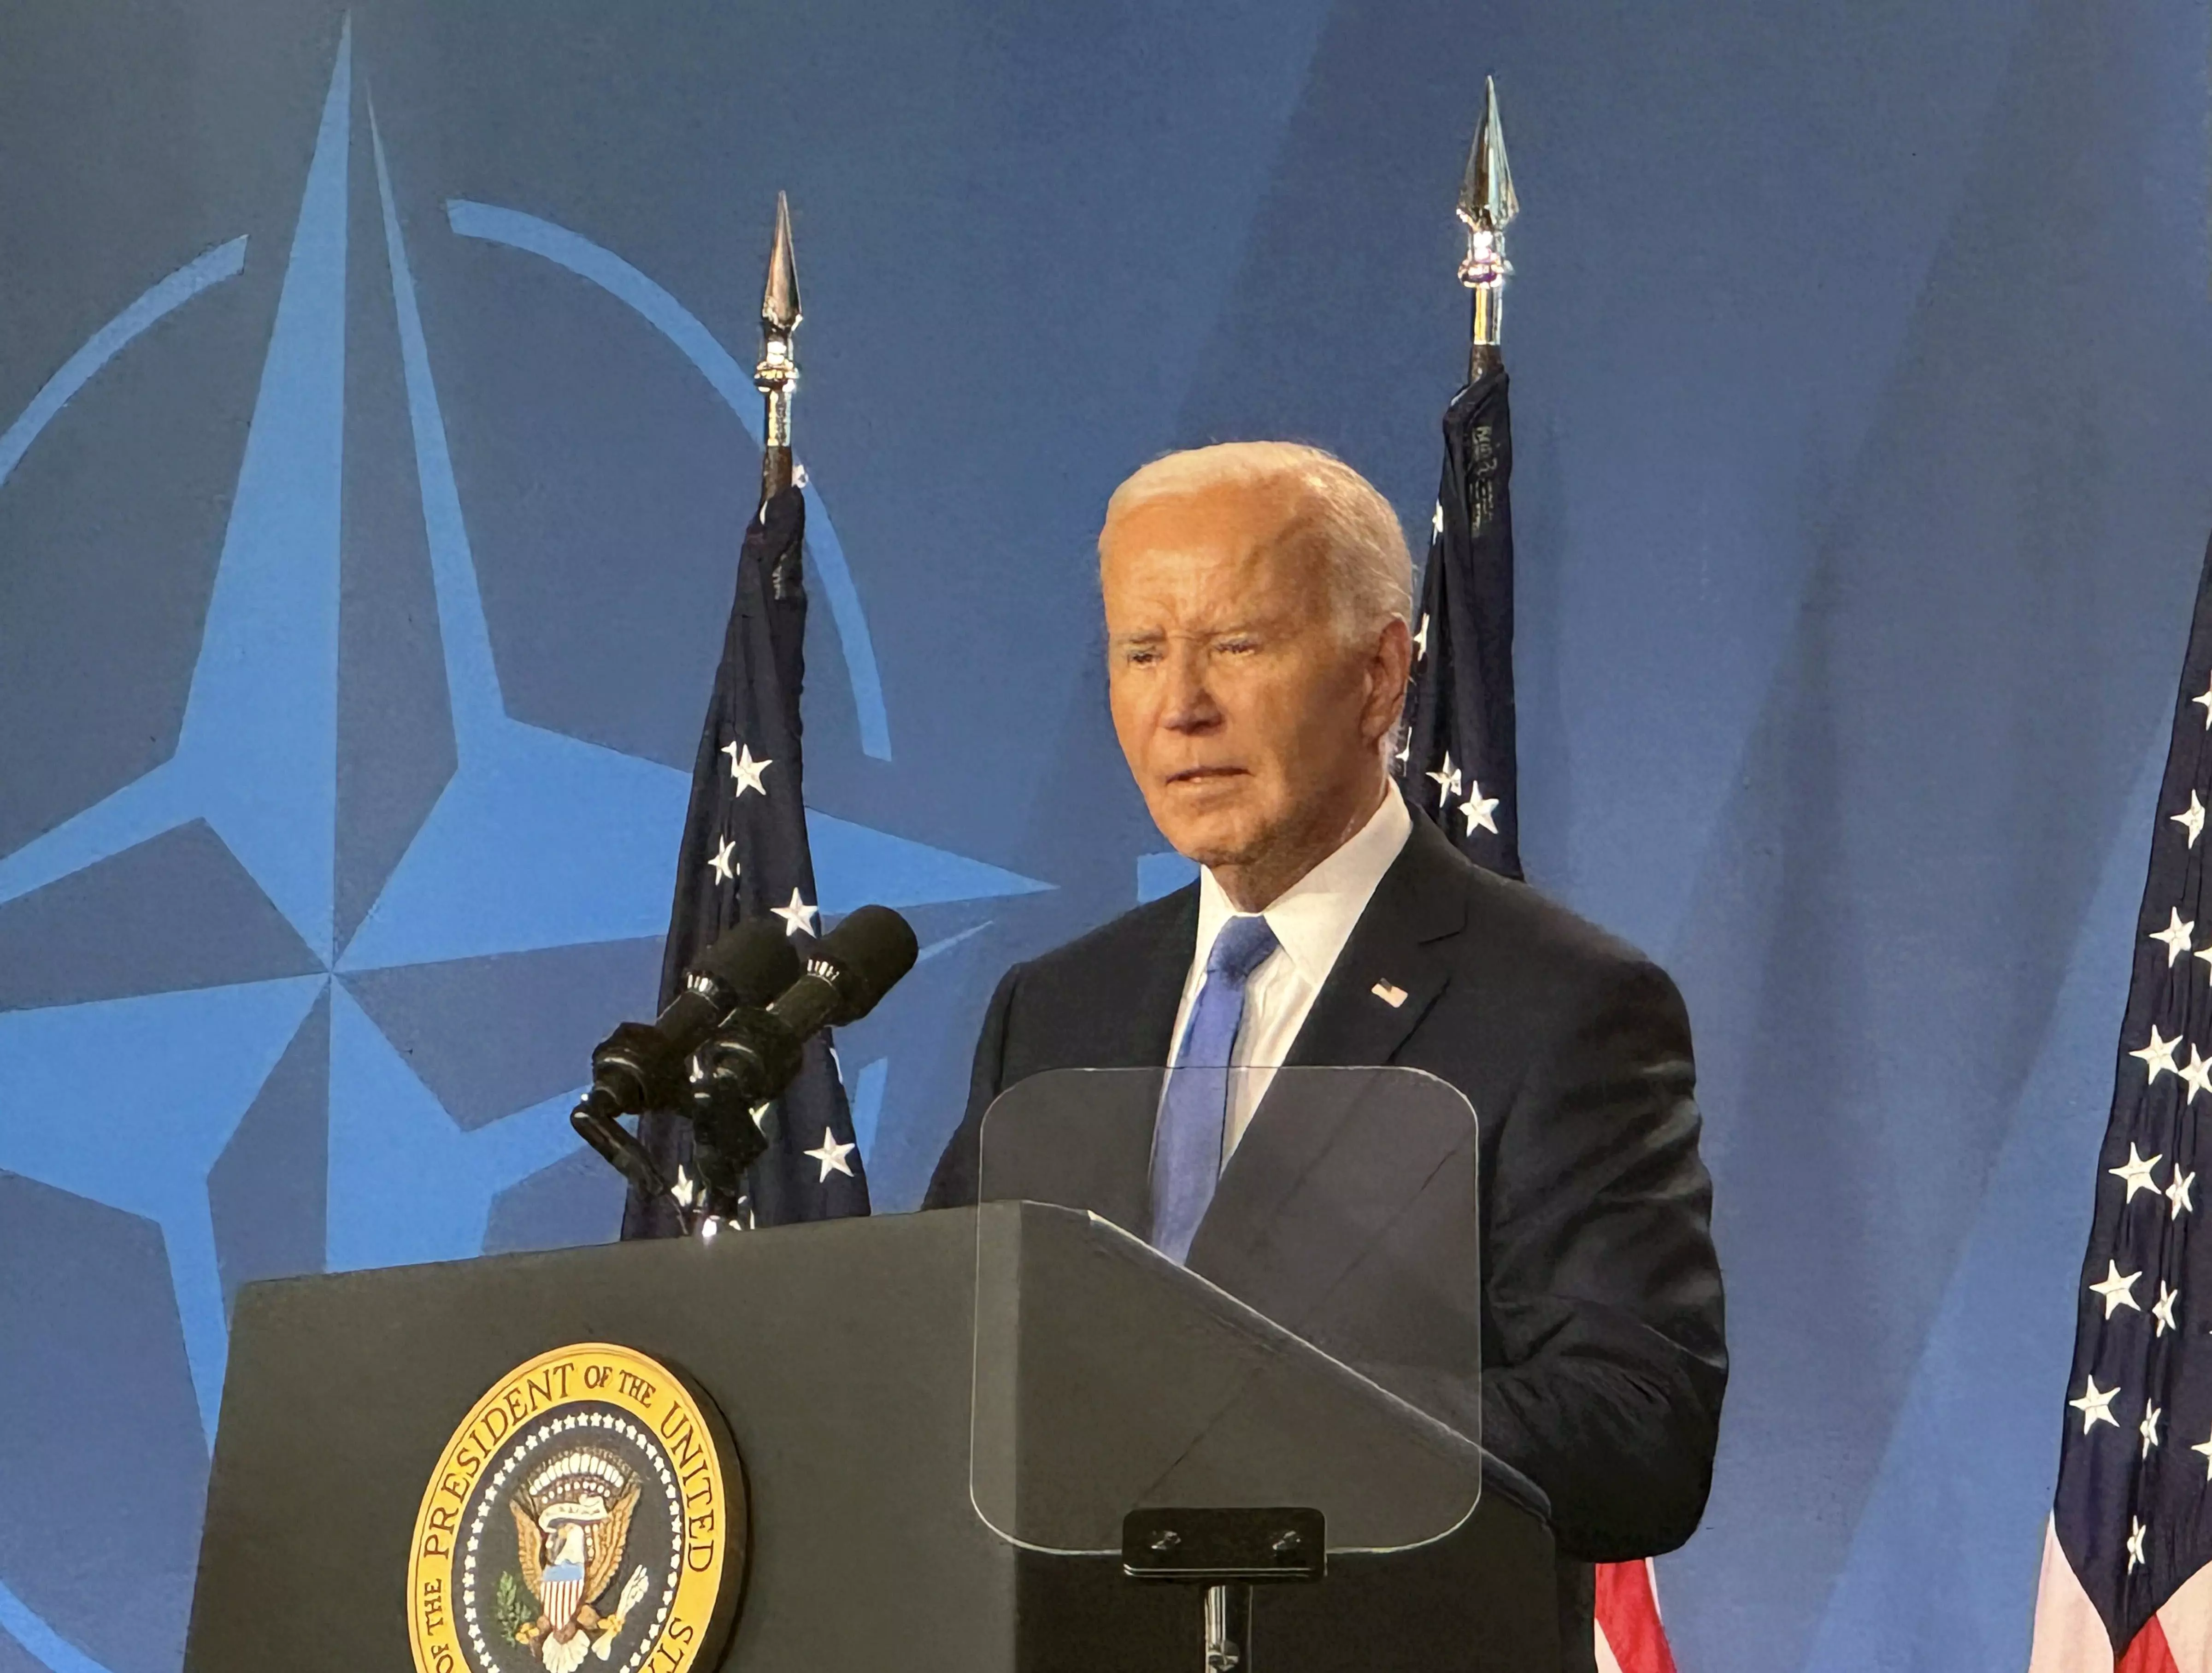 From Biden to Ukraine: Here are key takeaways from NATO summit